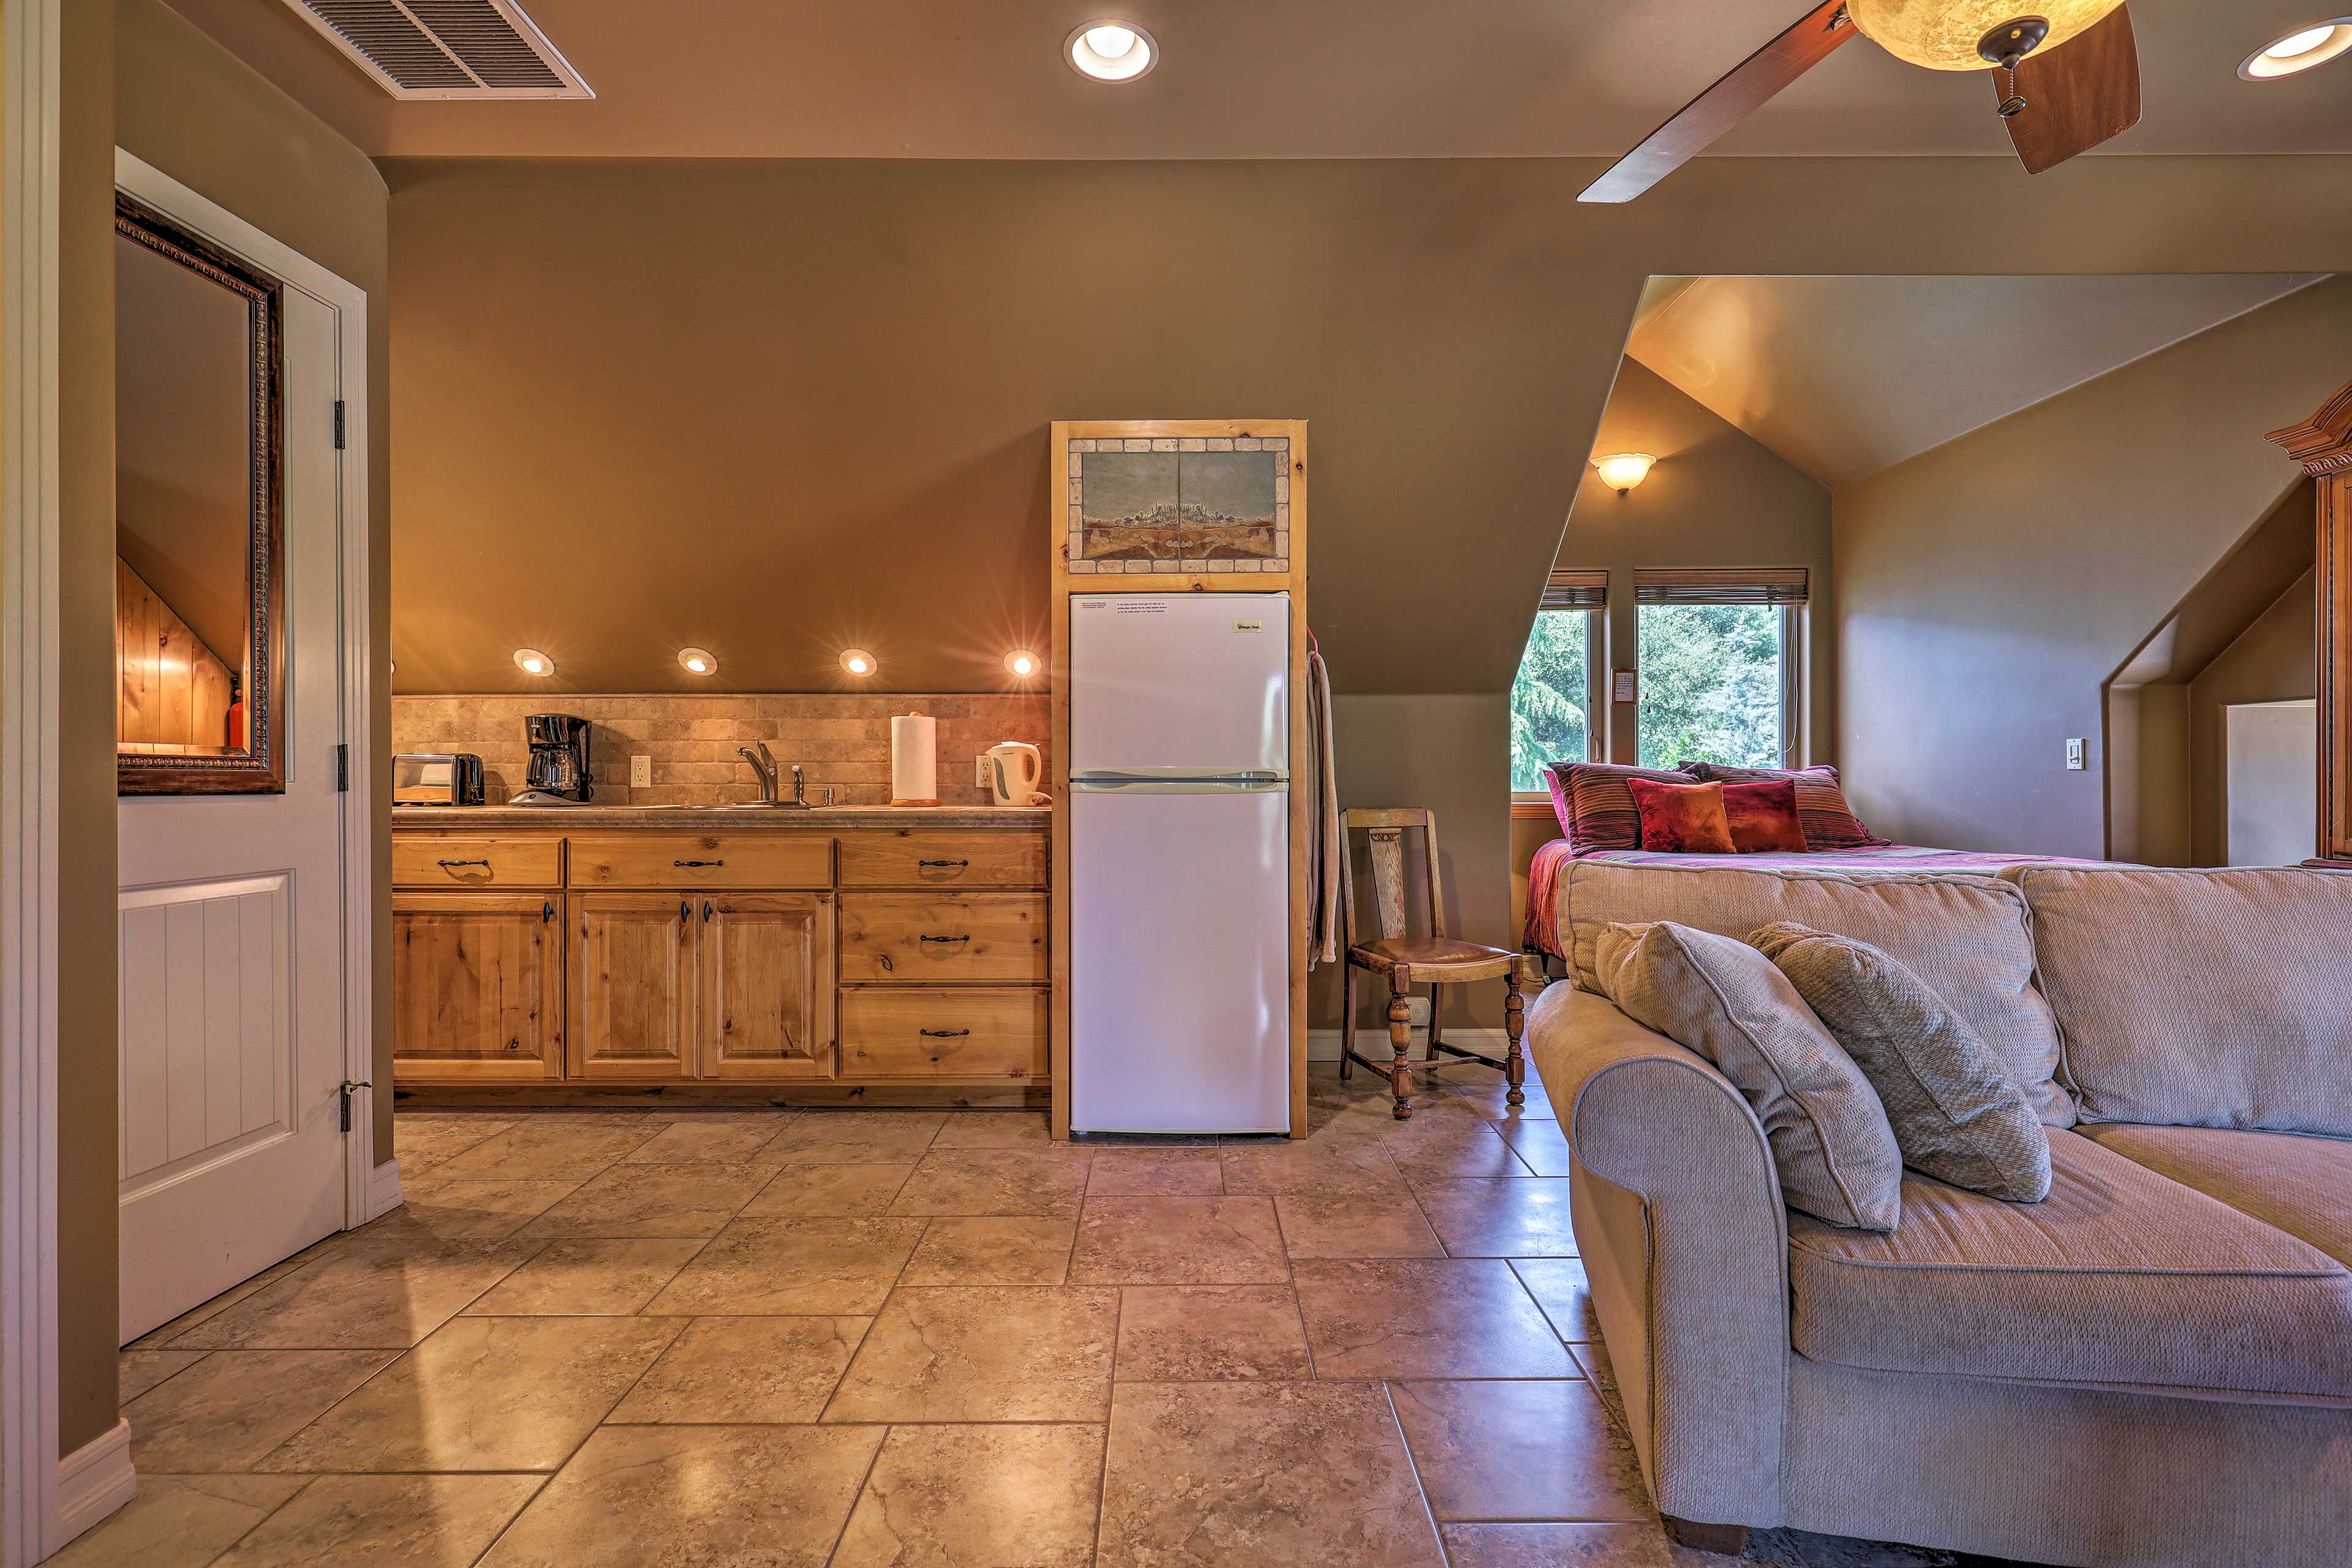 The custom tile-flooring and high ceilings provide a modern, airy feel.